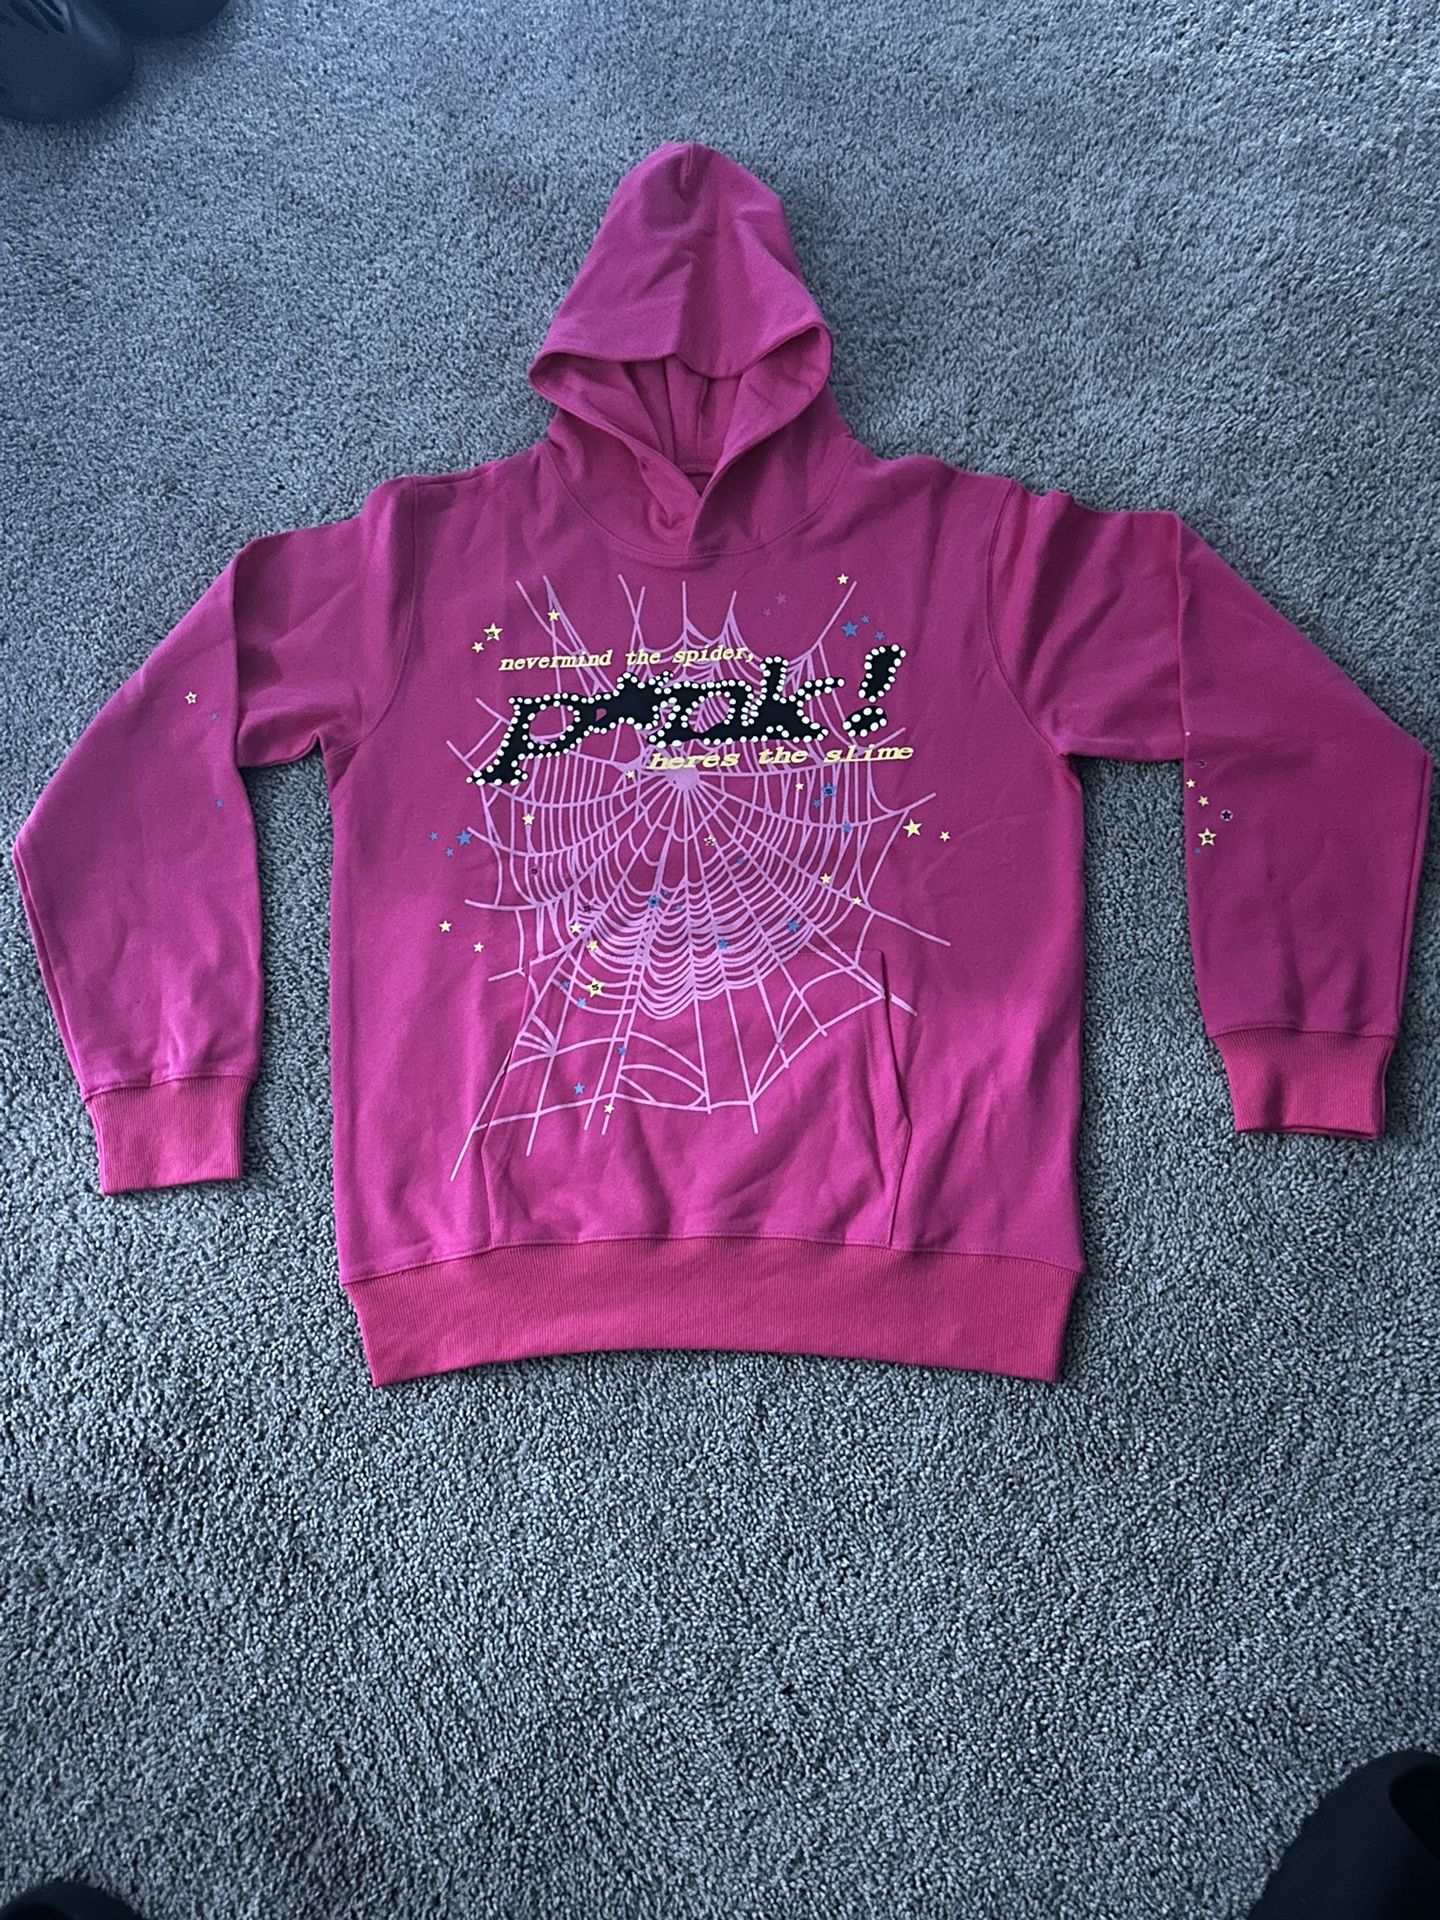 Sp5der pink hoodie (Medium)